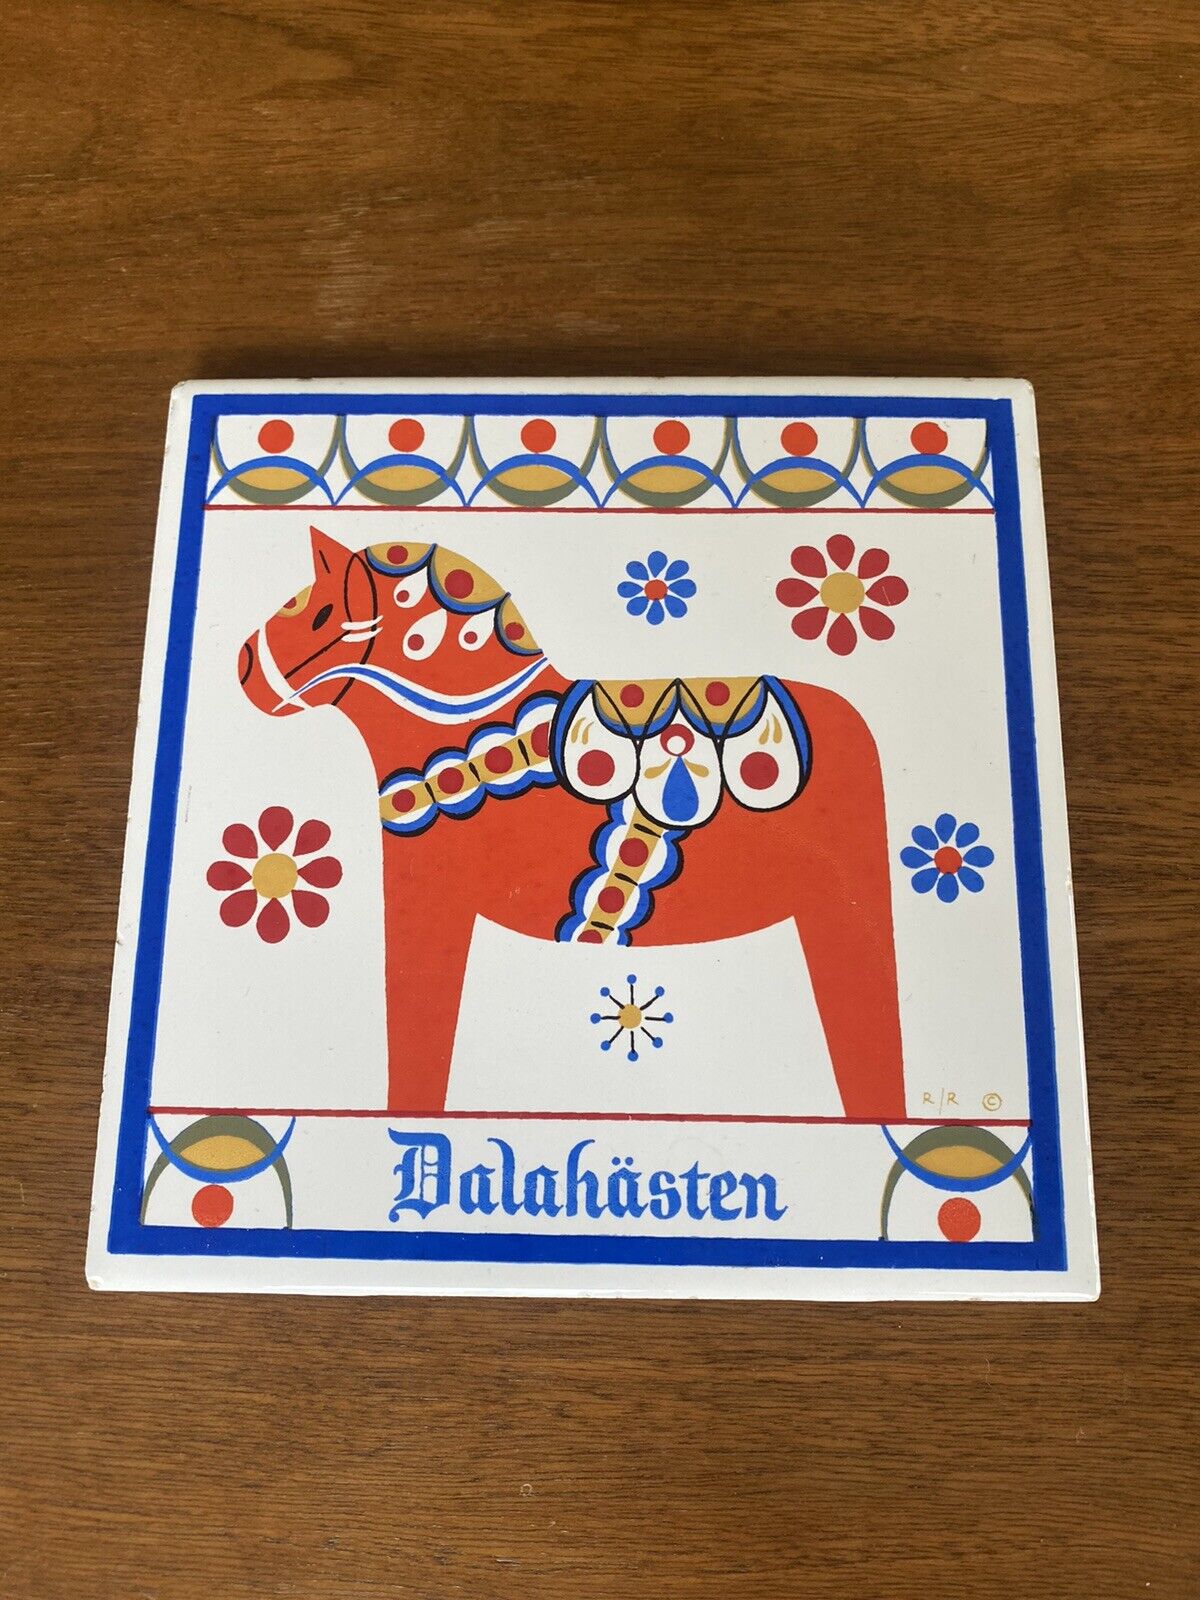 Vintage Swedish Dalahasten Dala Horse Scandinavian Art Tile Trivet Souvenir 6”